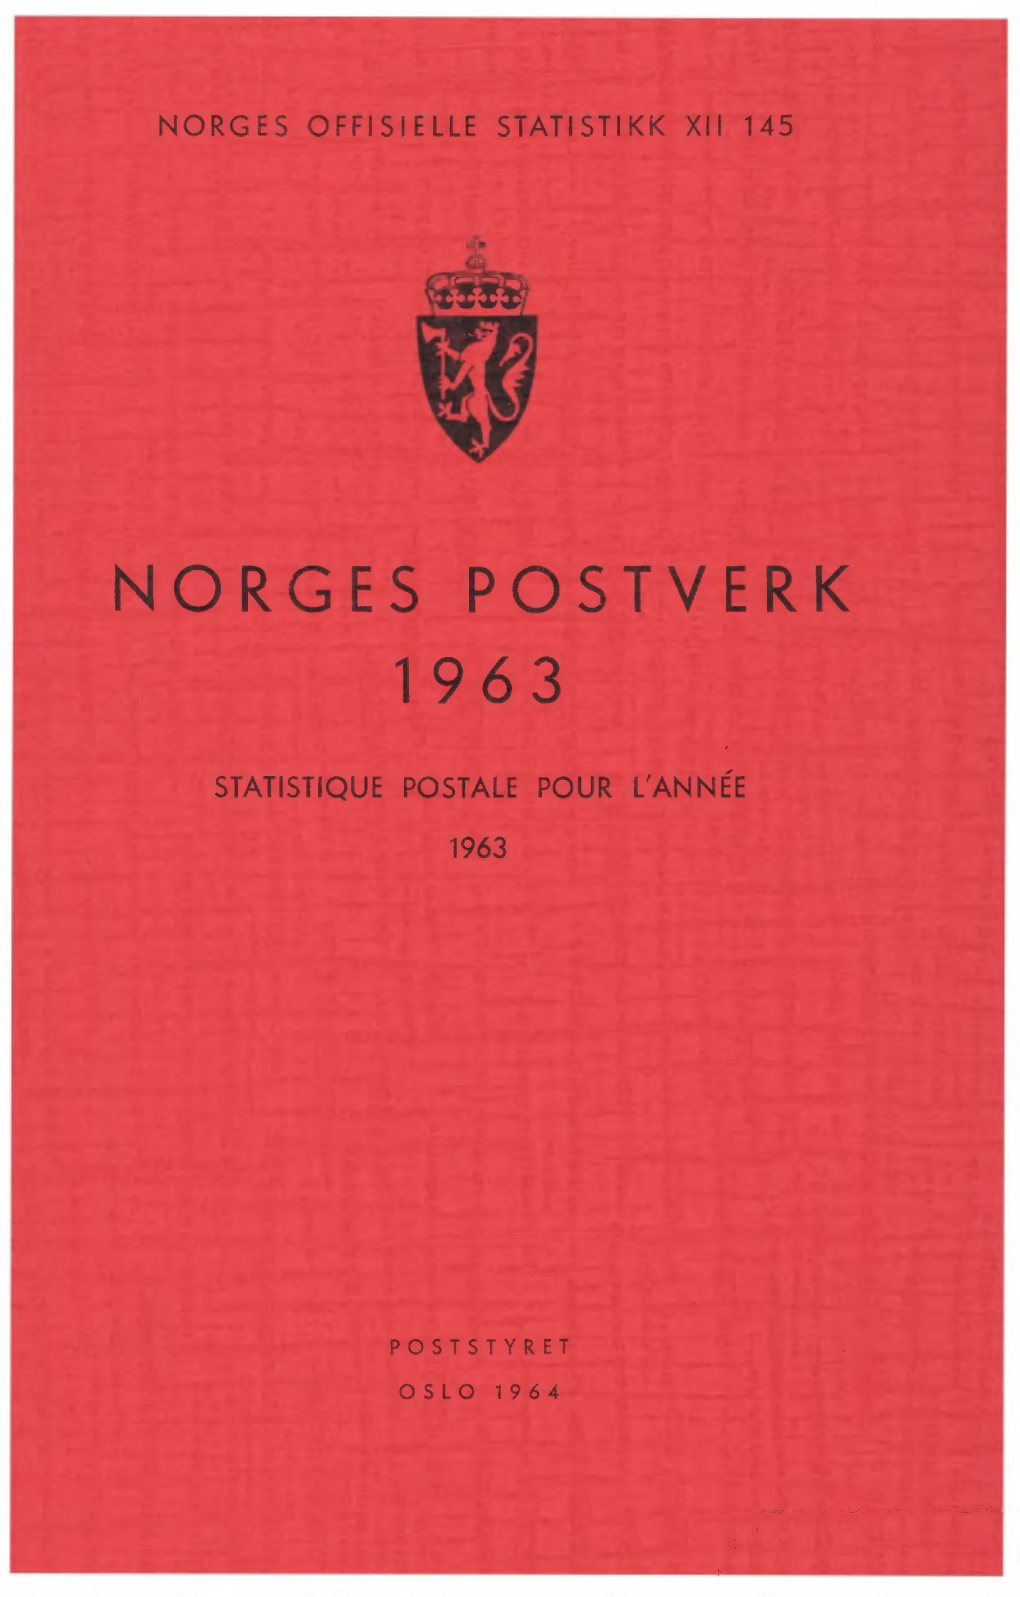 Norges Postverk 1963 Statistigue Postale �O�GES O��ISIE��E S�A�IS�IKK �II 1�5